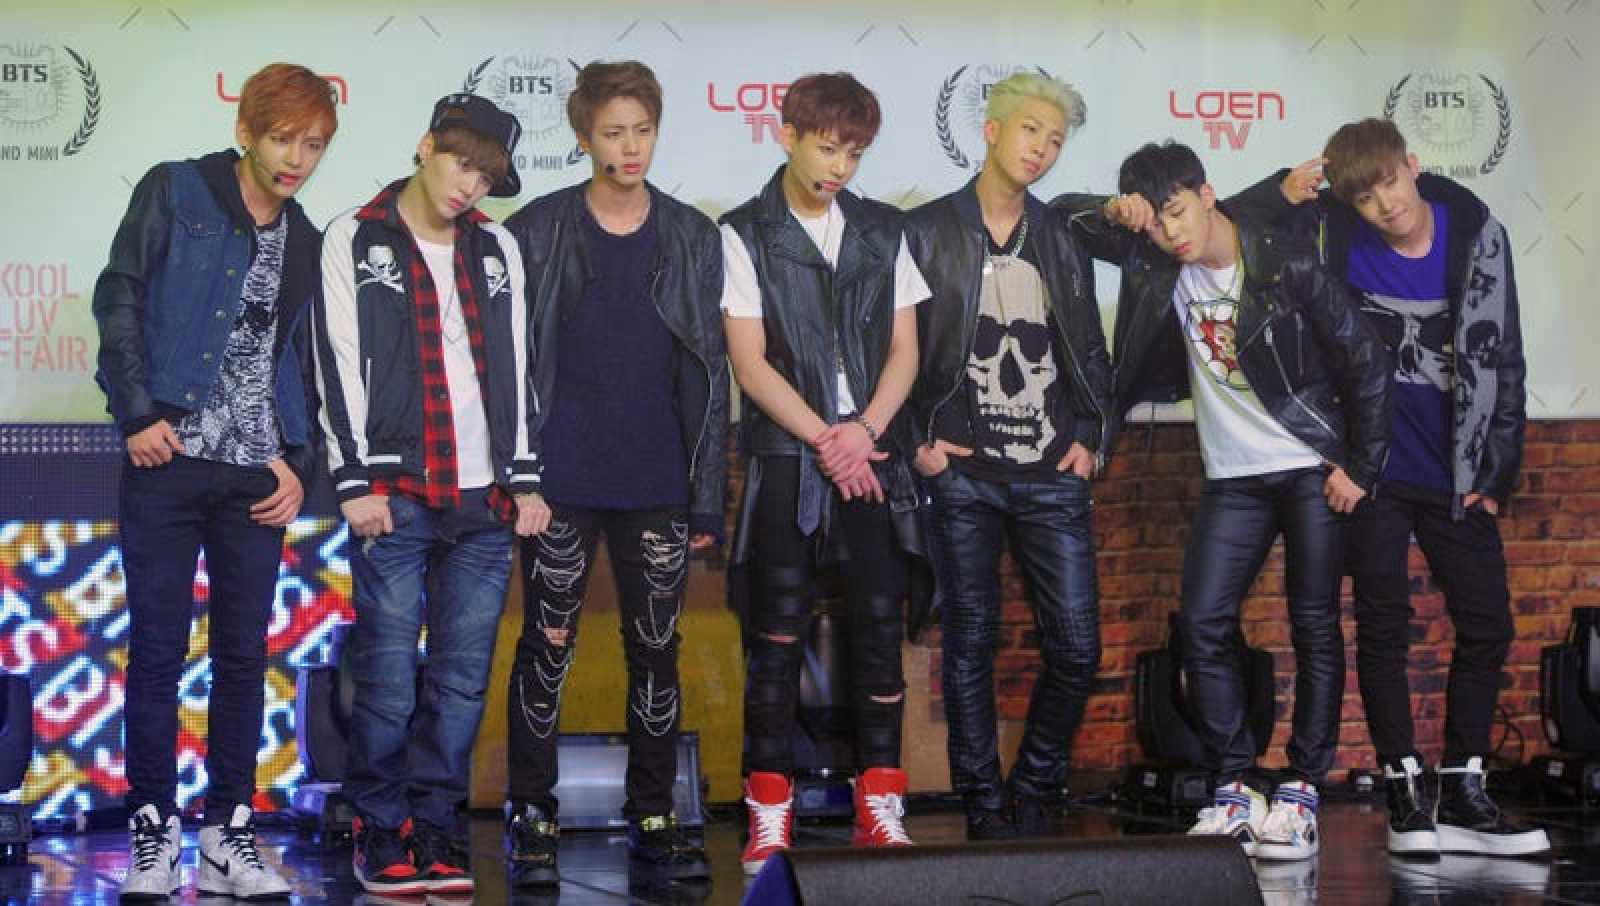 BTS на презентации в Lotte Card Art Center в Сеуле, Южная Корея, 2014 год. Фото: Getty Images